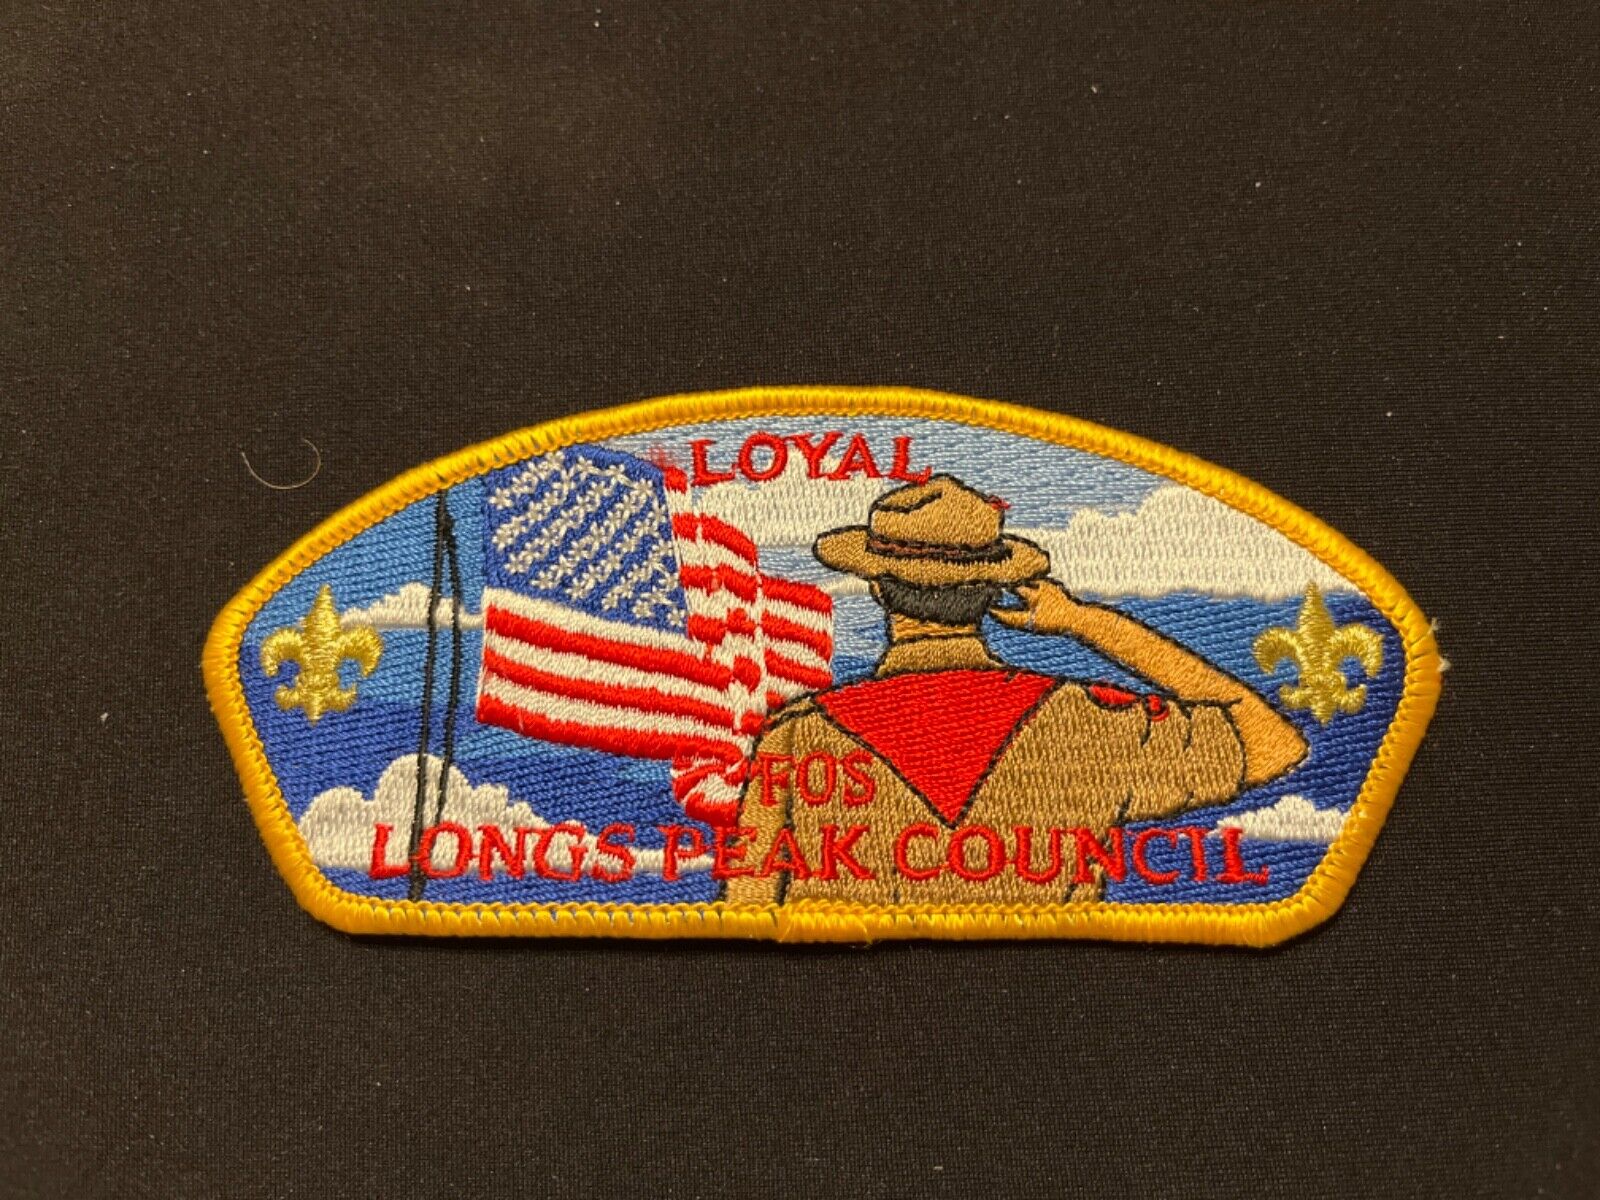 Longs Peak Council BSA FOS CSP “Loyal” Scout Law Series Patch - Yellow